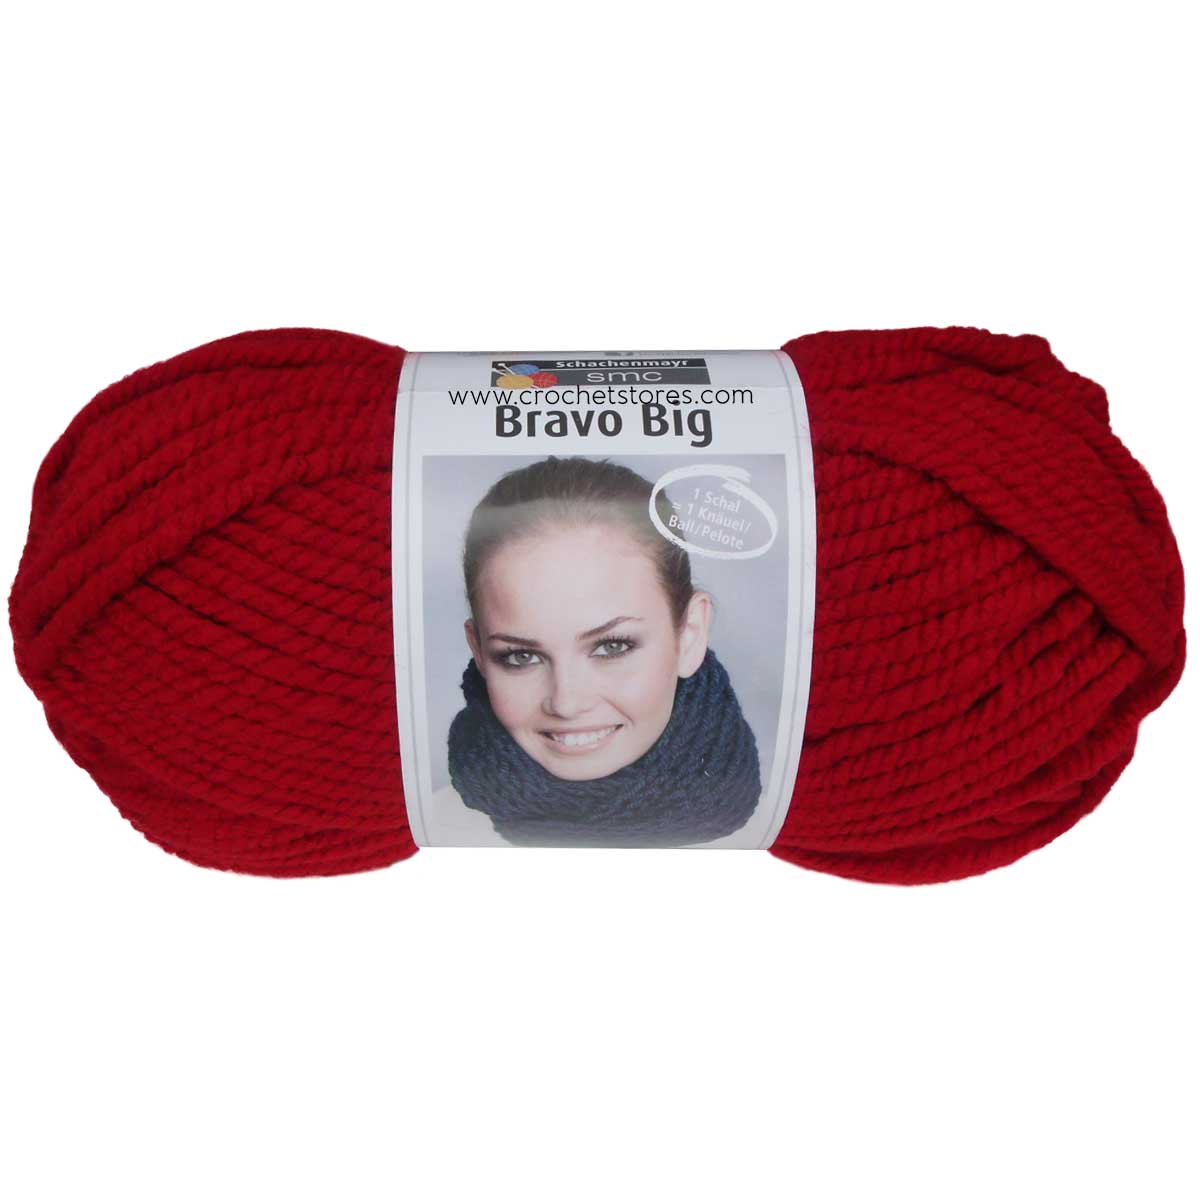 BRAVO BIG - Crochetstores9807705-1304082700833108